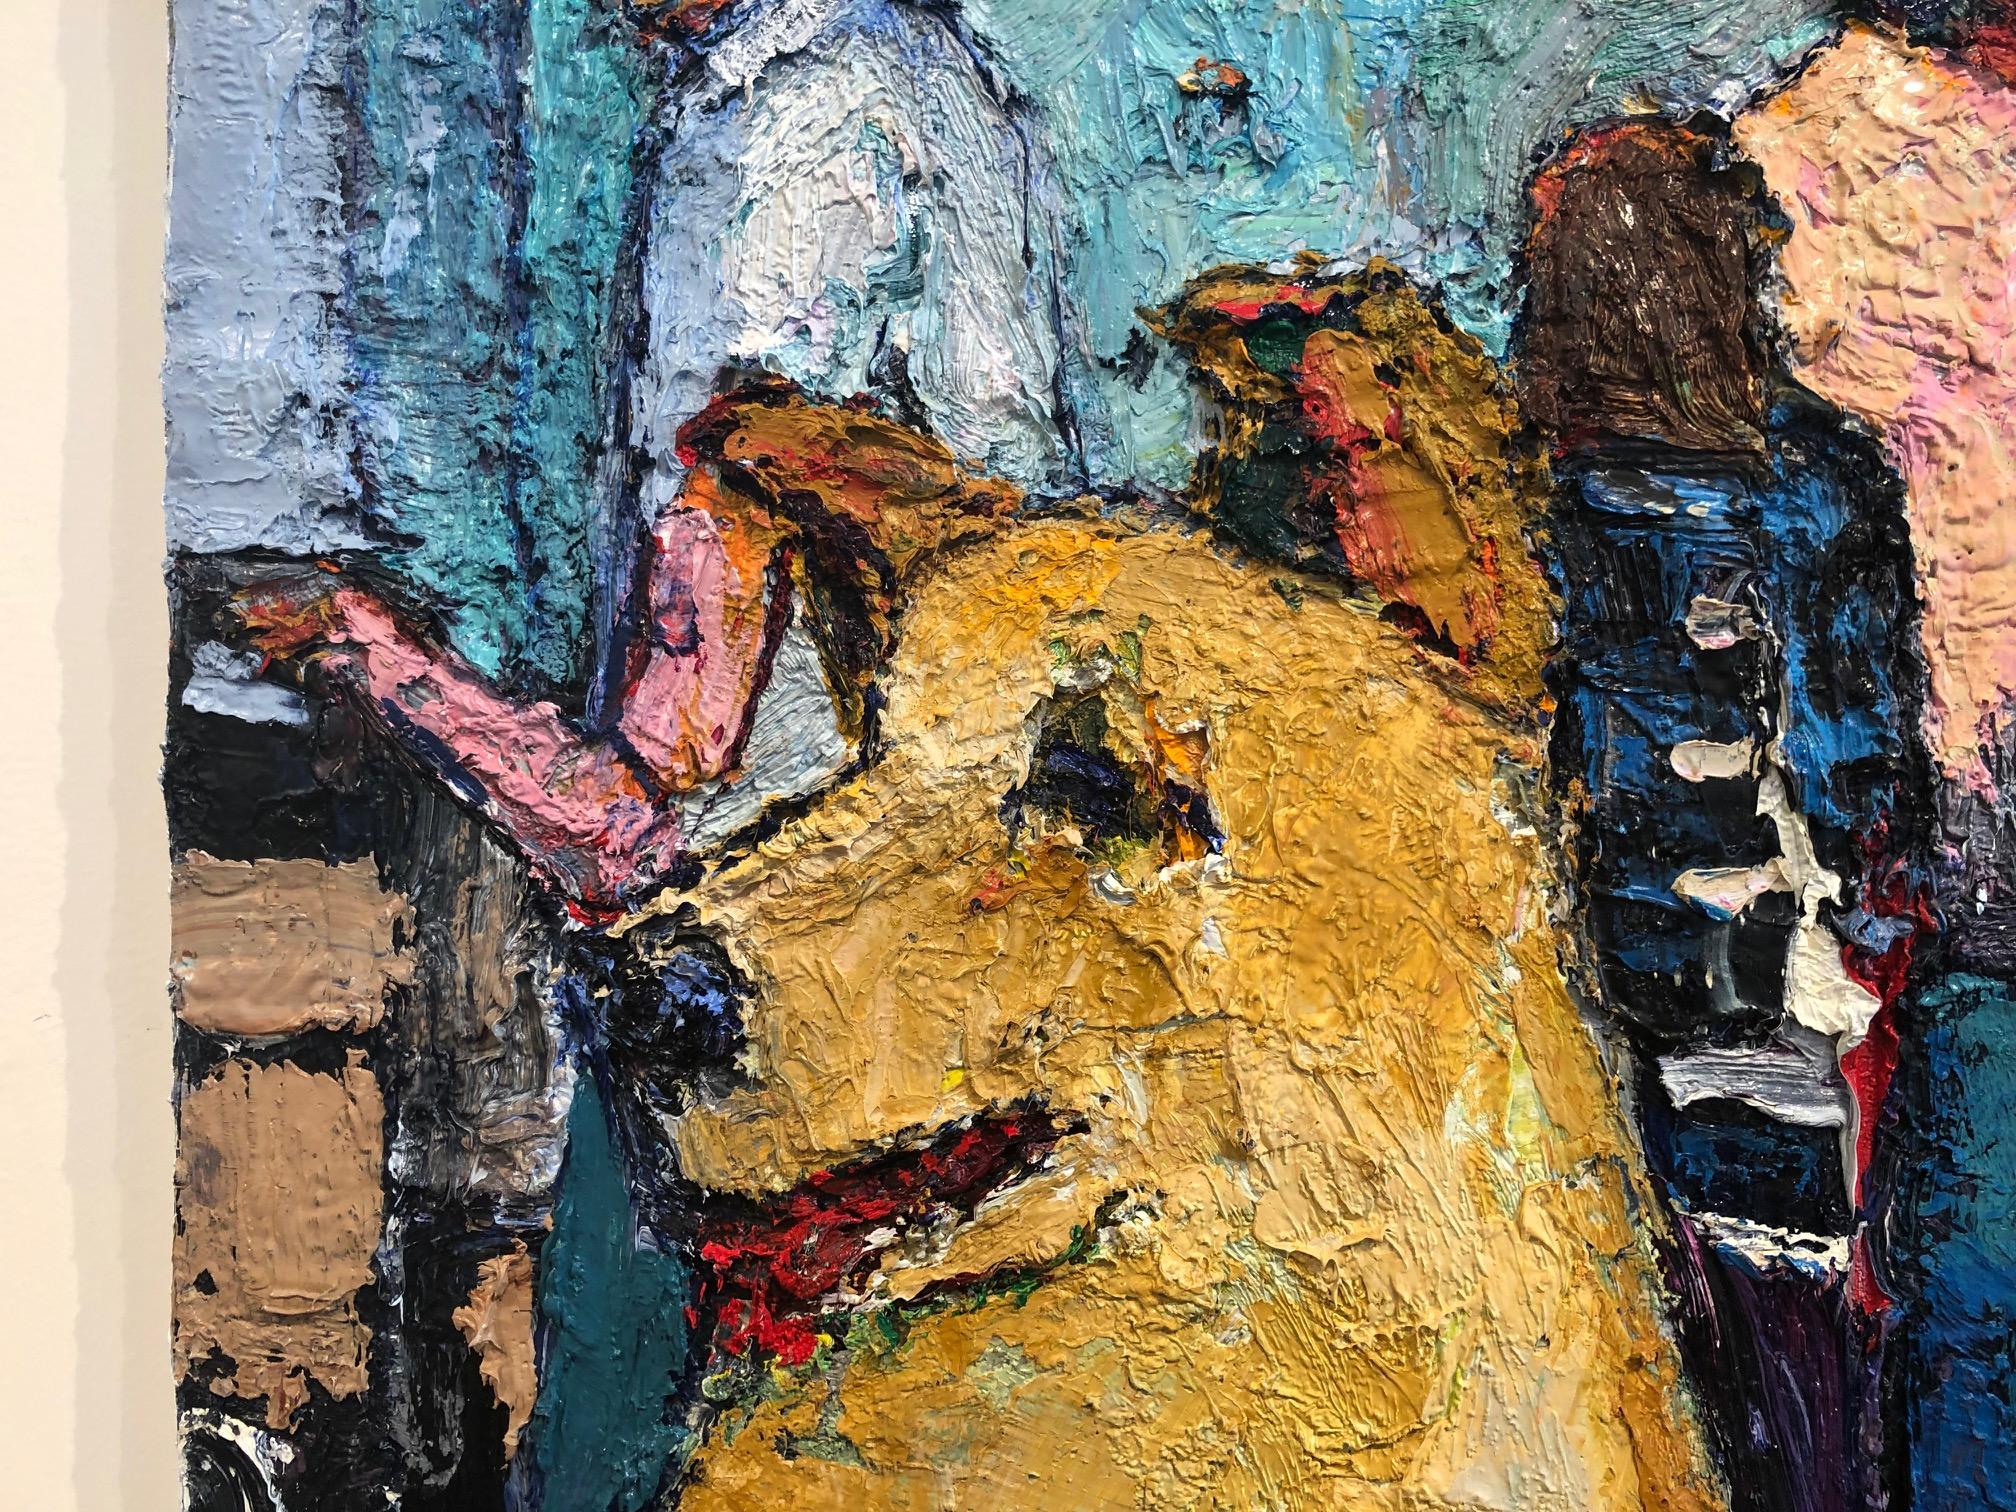 THE FLAT  - vie urbaine avec chien - huile sur toile - Painting de William Rushton